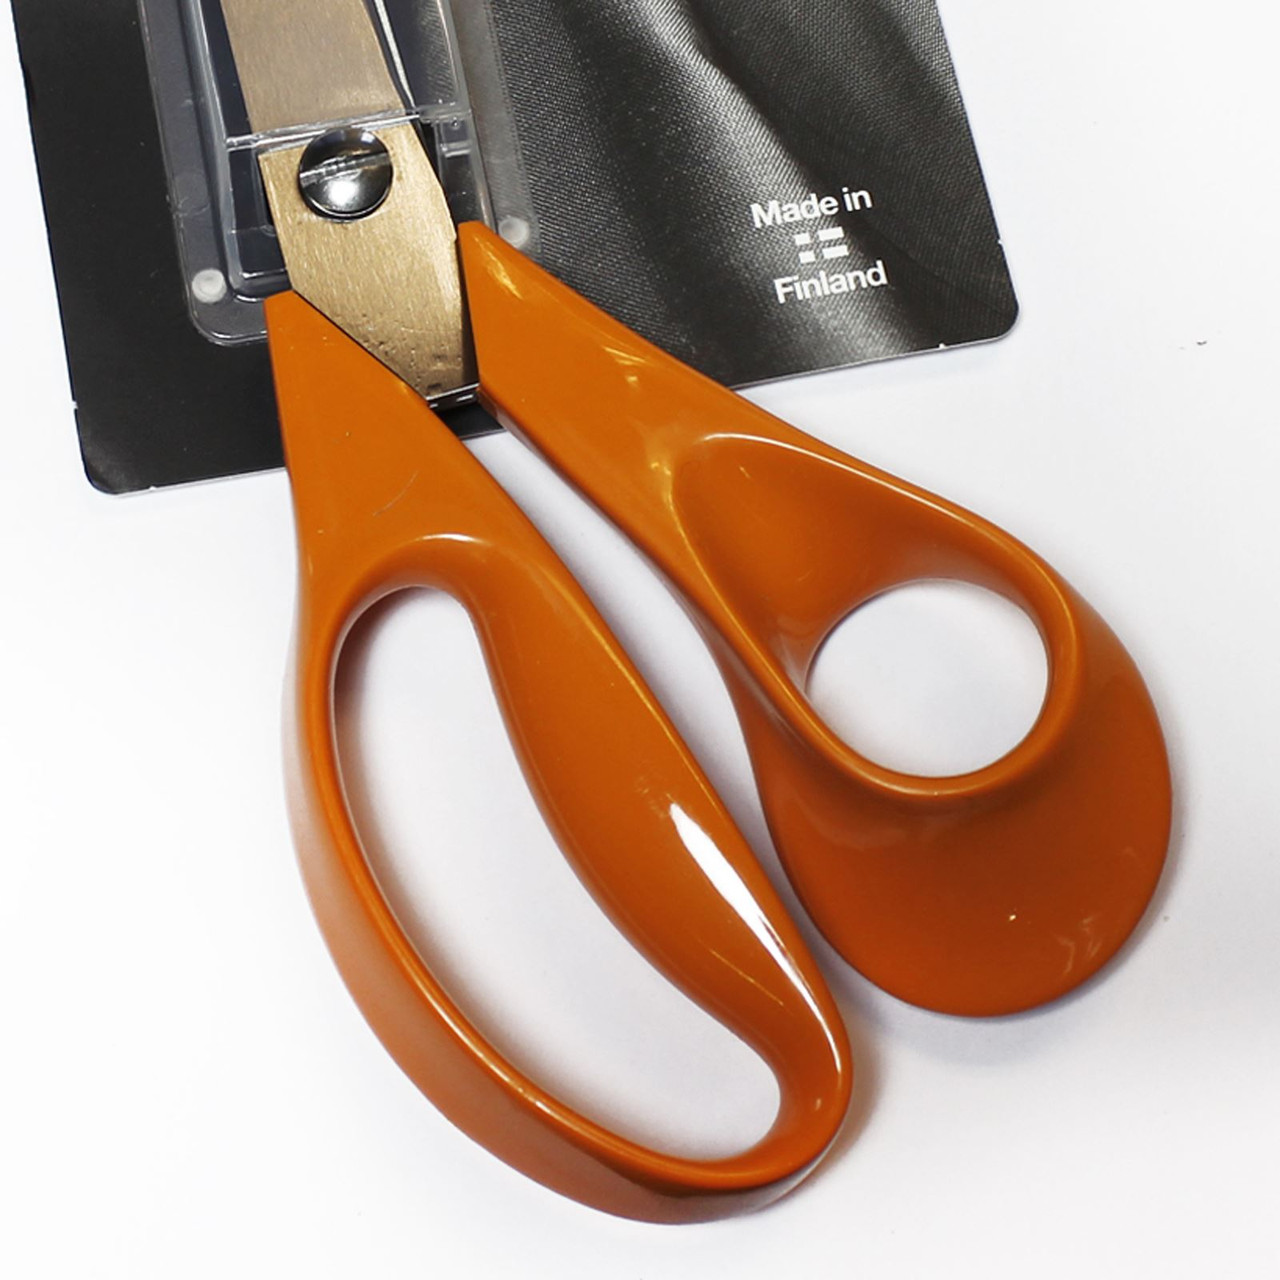 Left Handed Scissors, Fiskars Scissors, Classic Universal Purpose